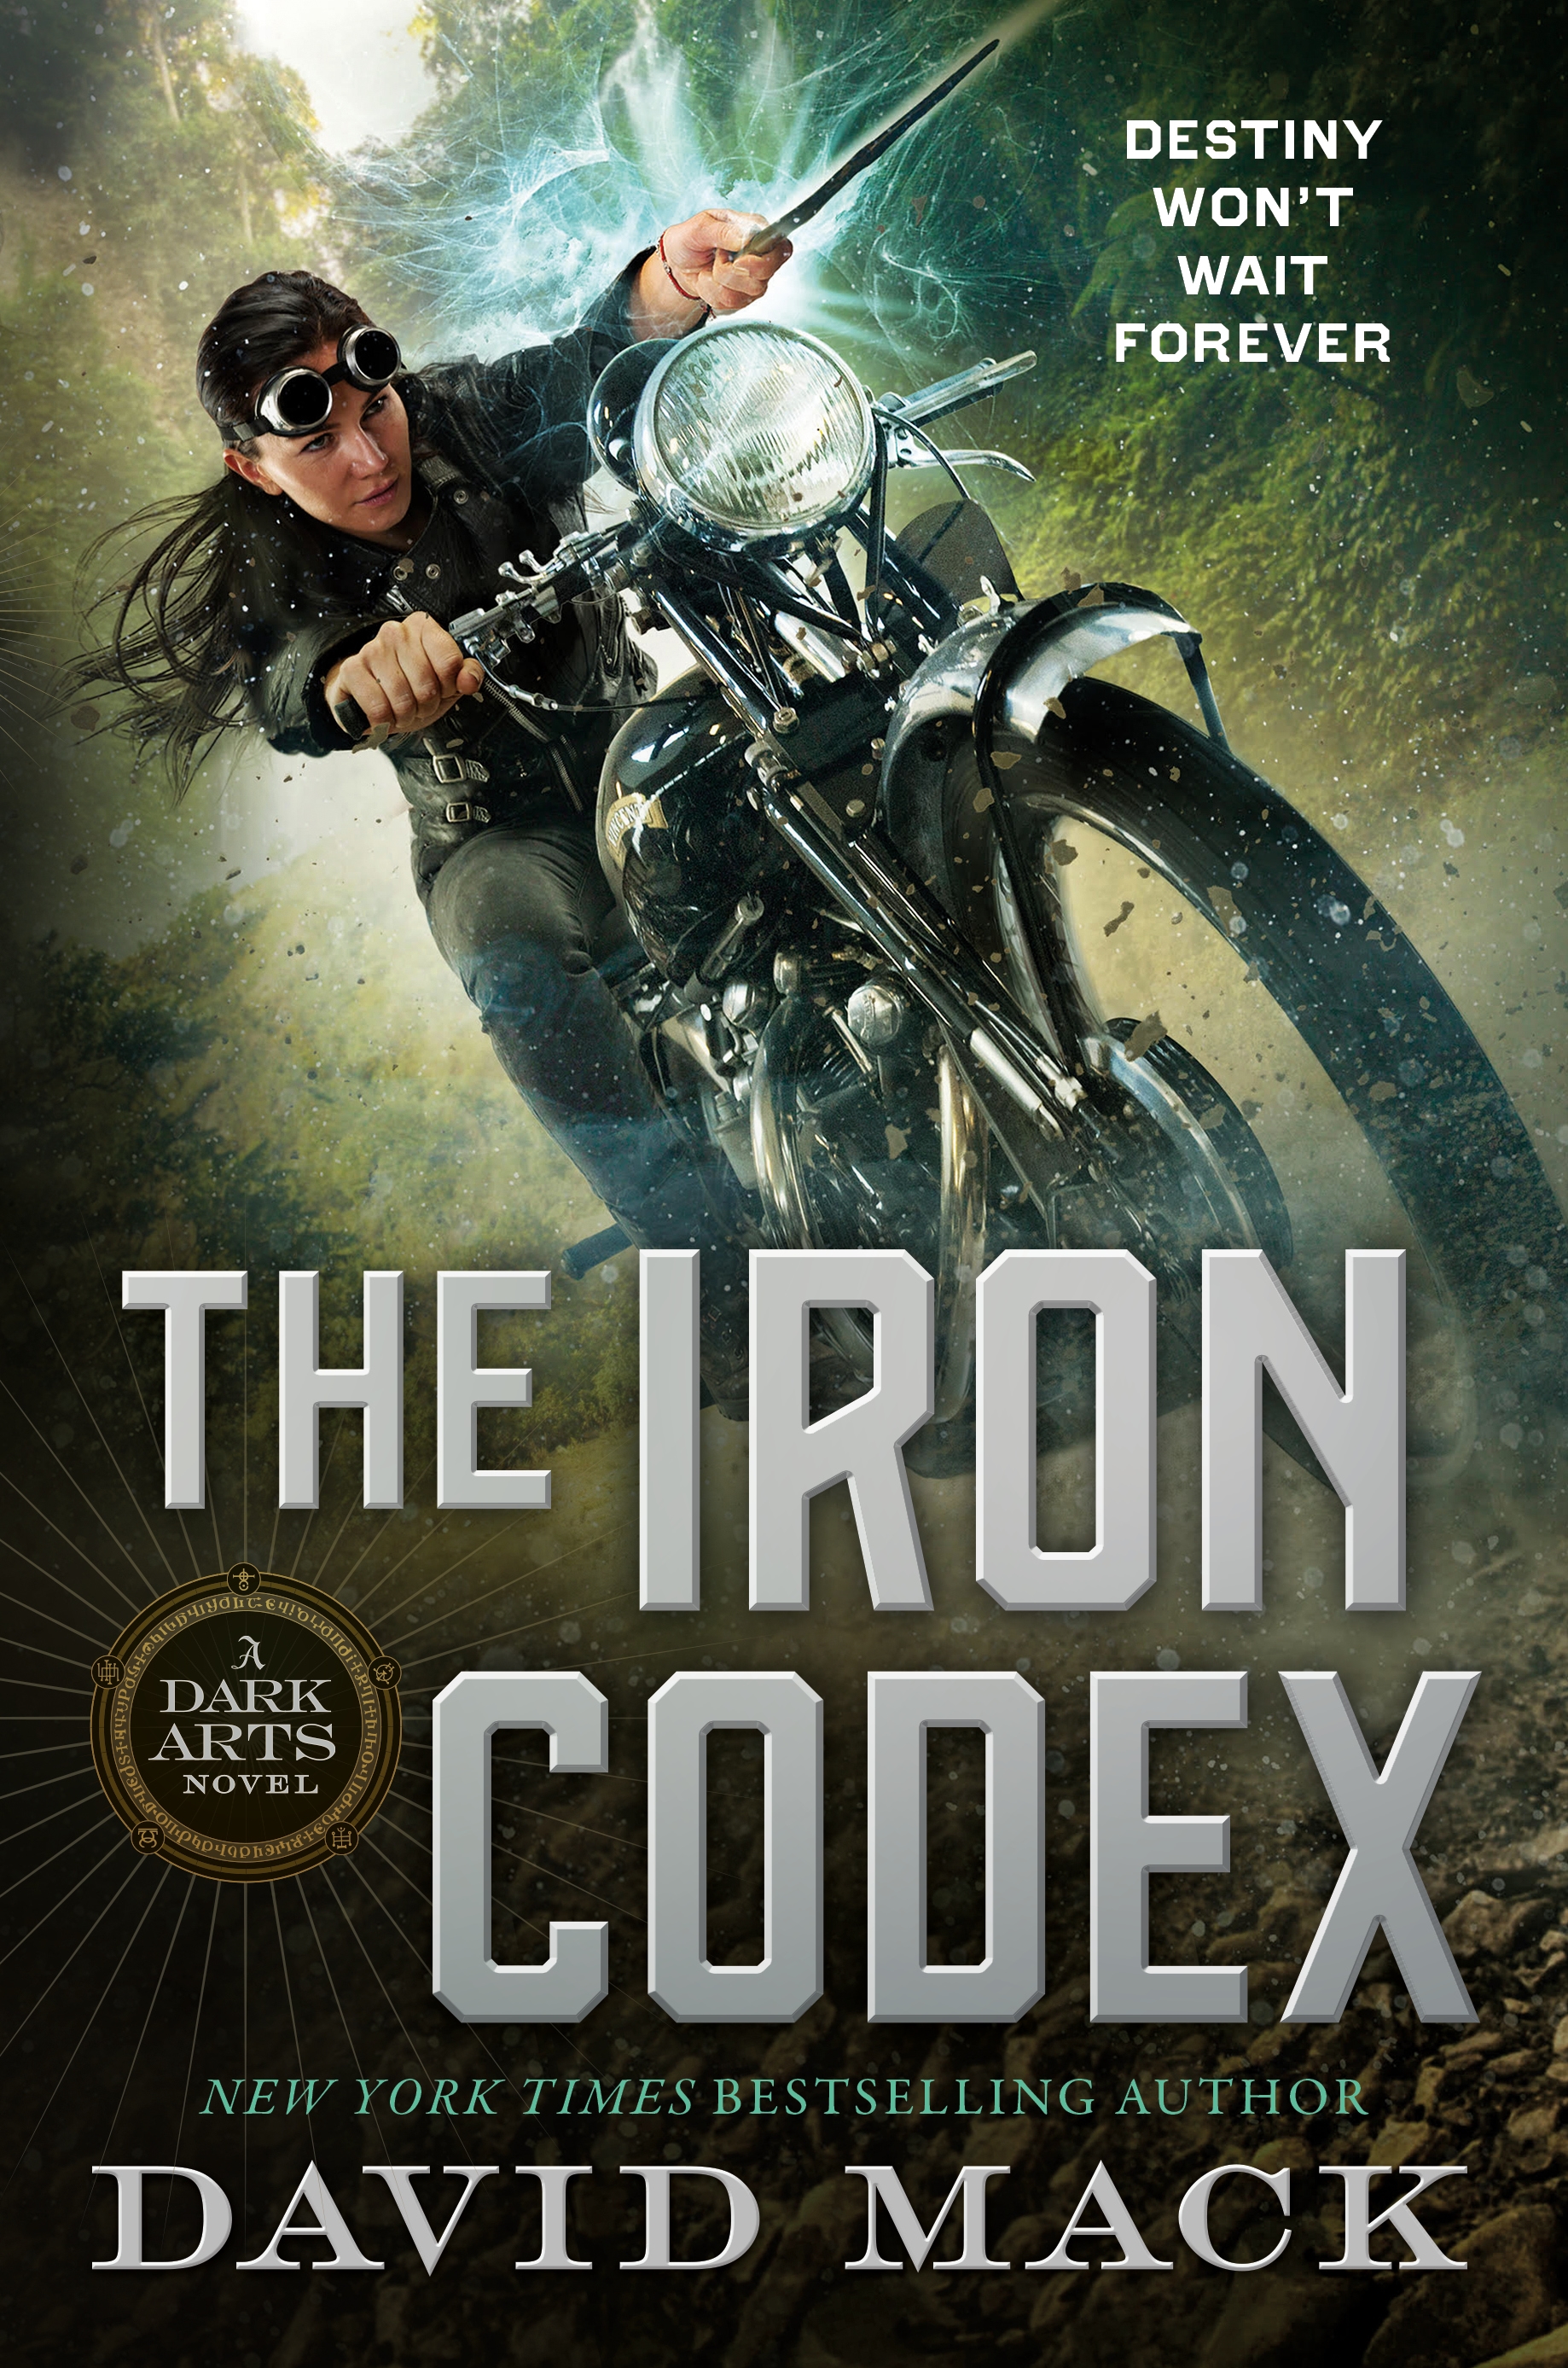 The Iron Codex : A Dark Arts Novel by David Mack